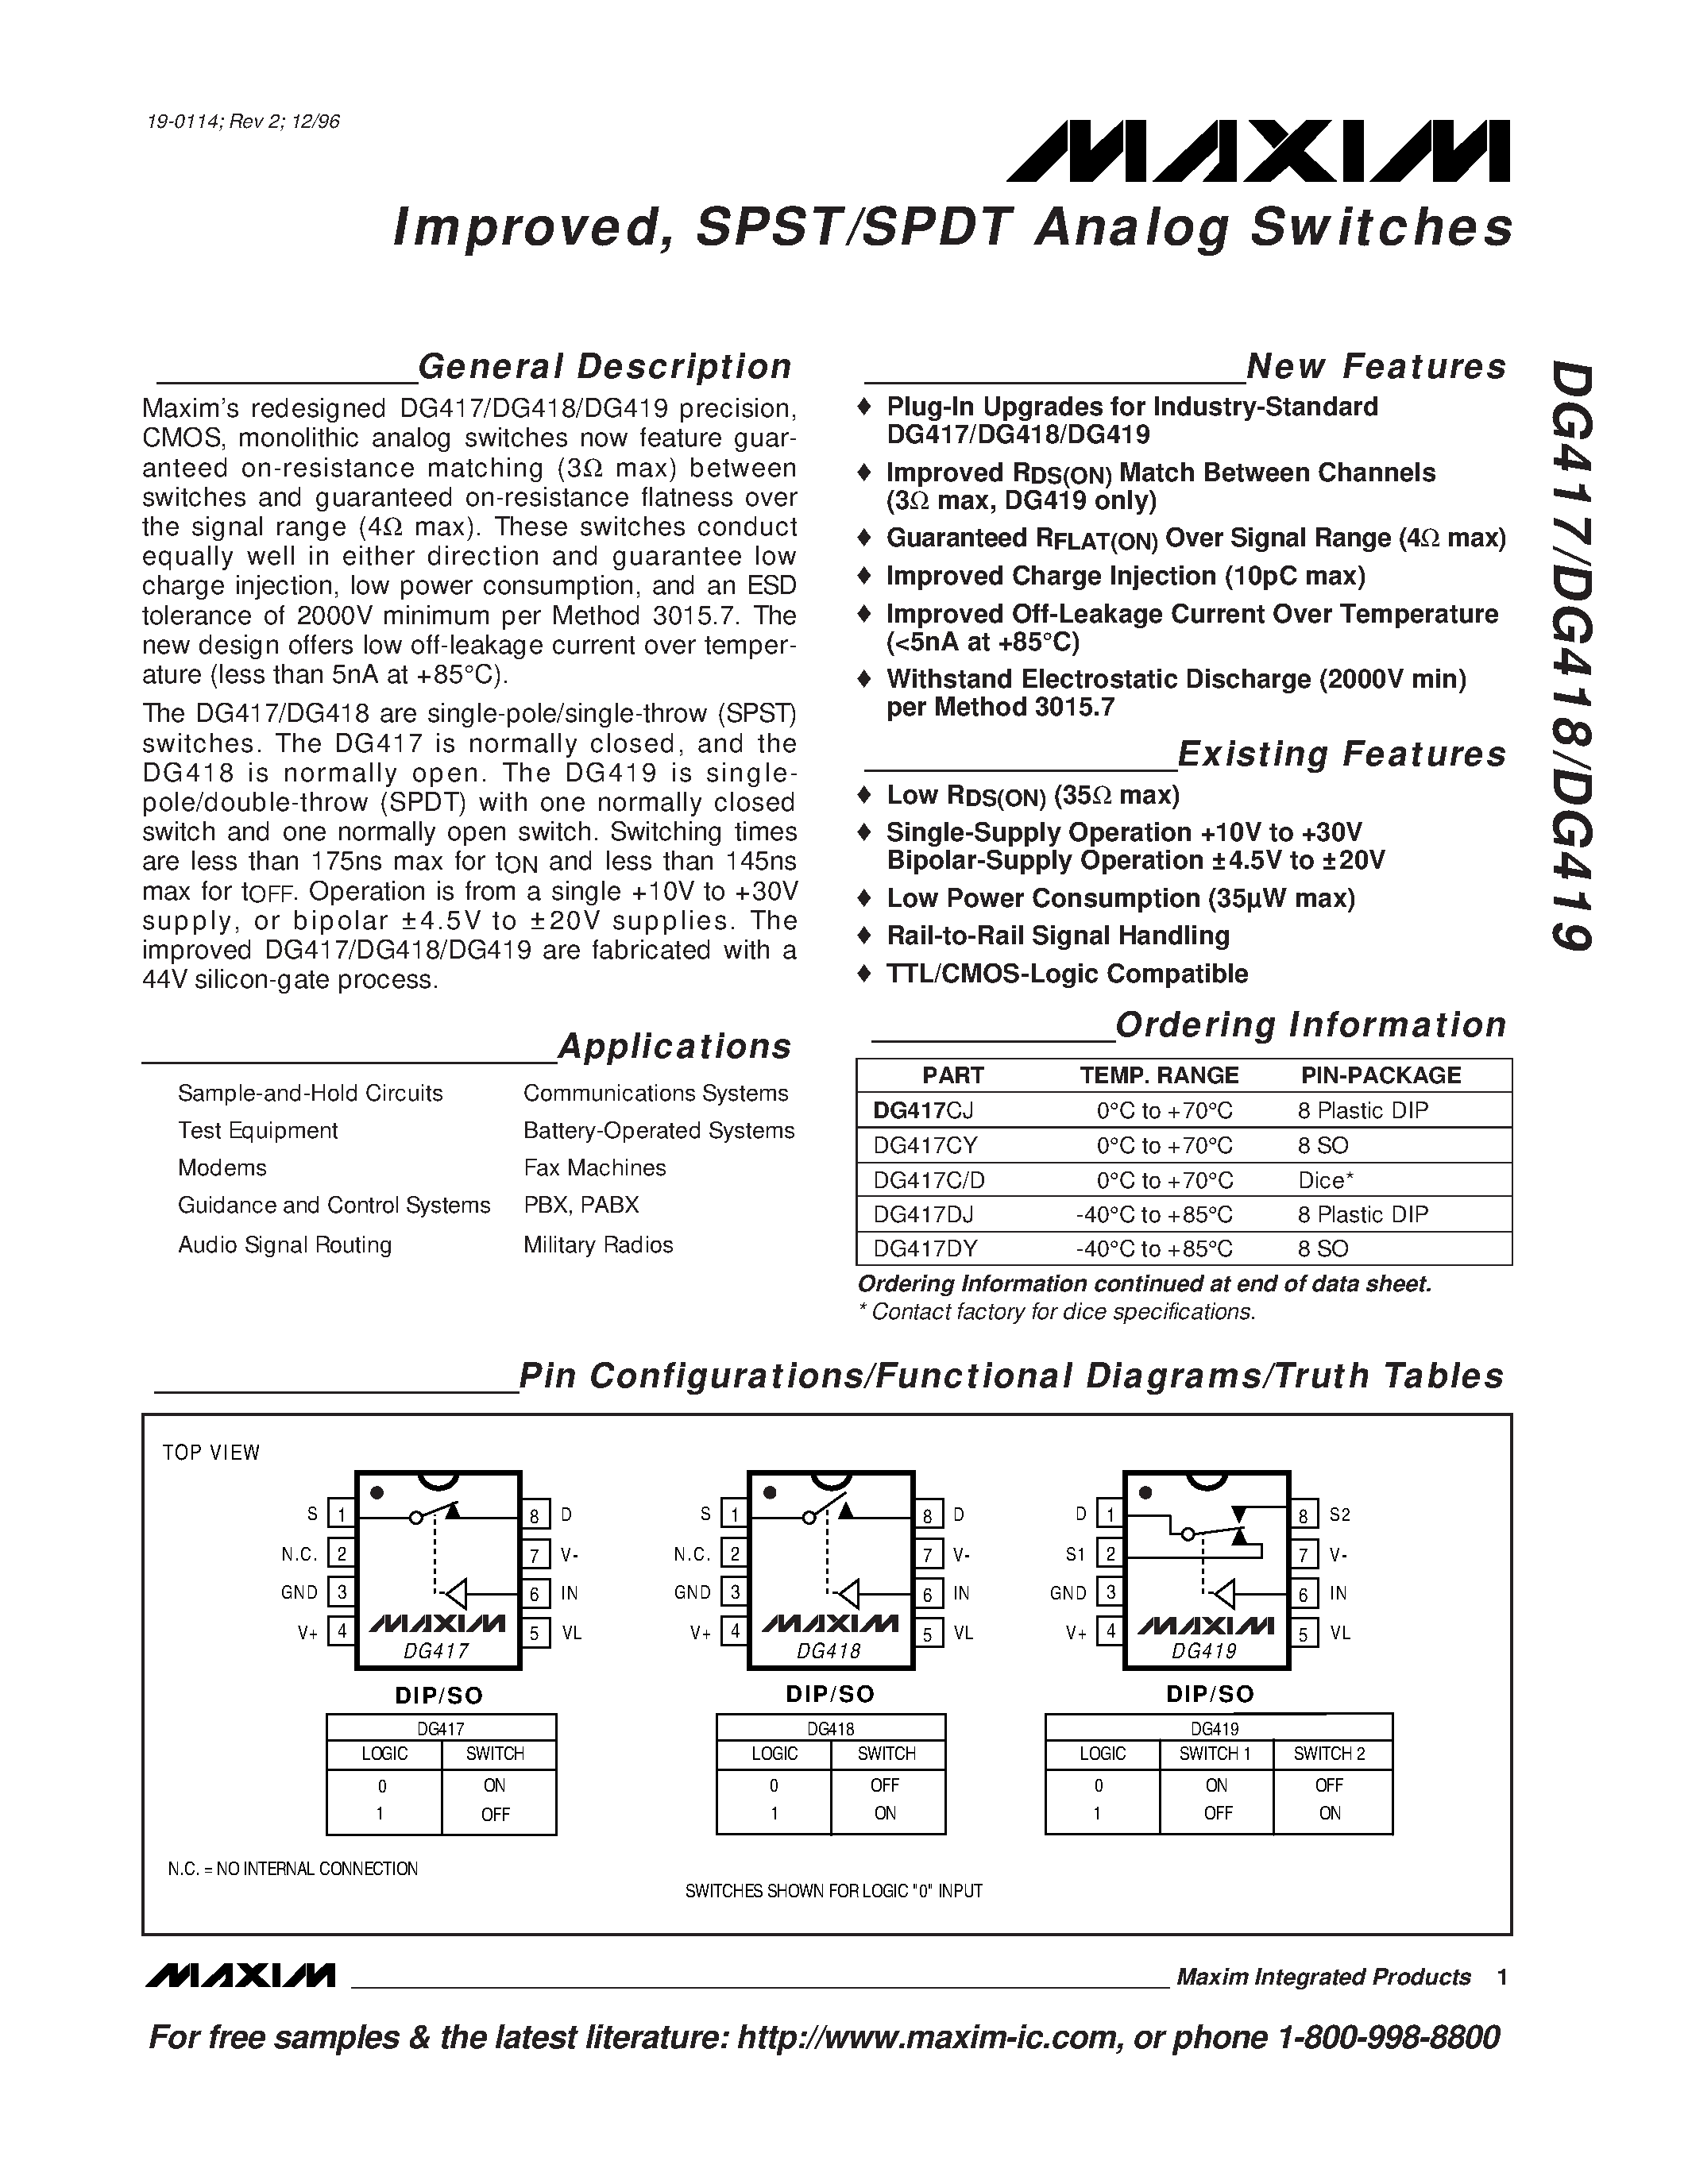 Datasheet DG418C/D - Improved / SPST/SPDT Analog Switches page 1